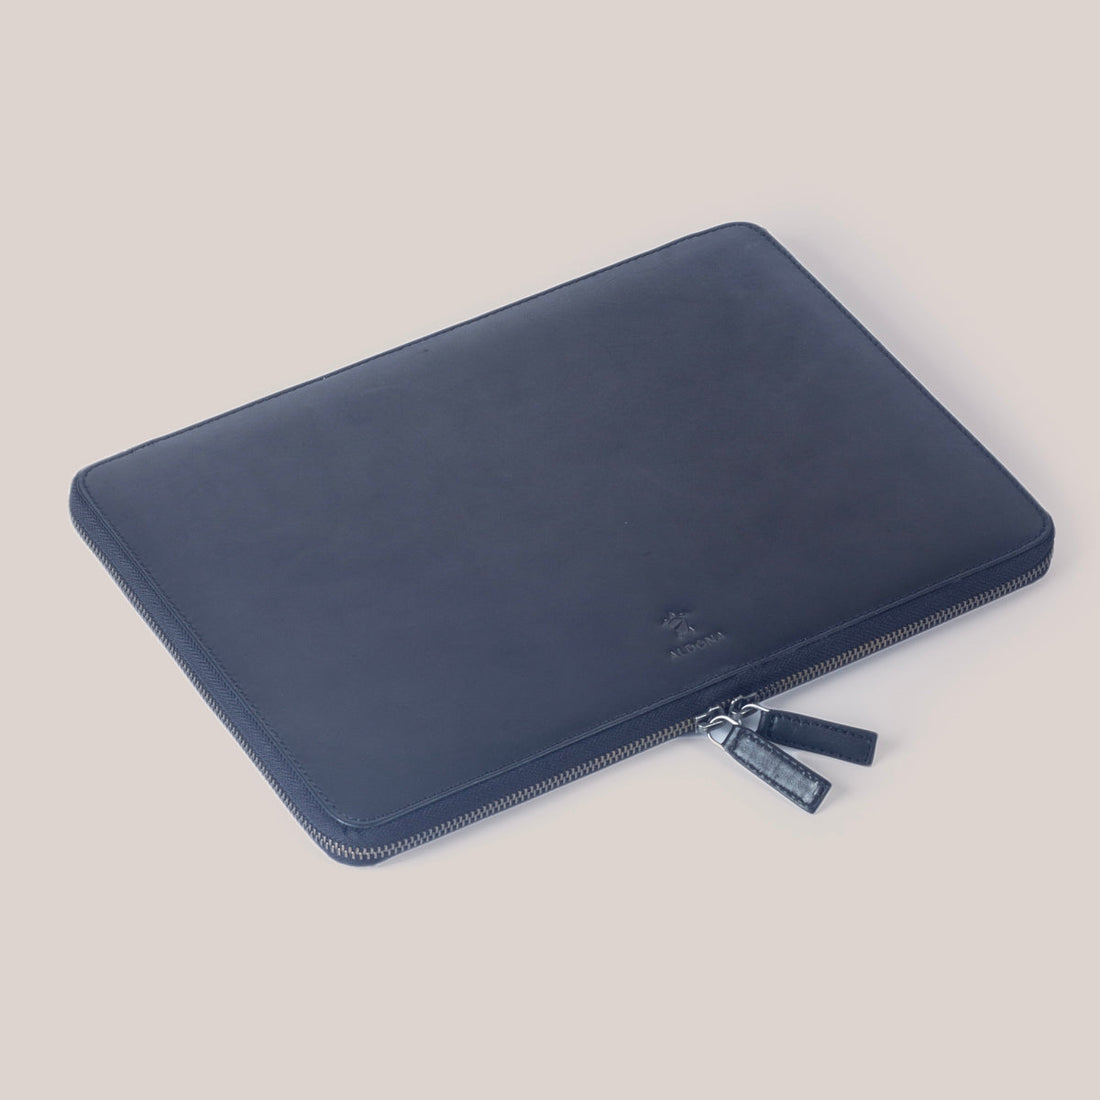 Microsoft Surface Laptop 15 Zippered Laptop Case - Felt and Tan Crunch